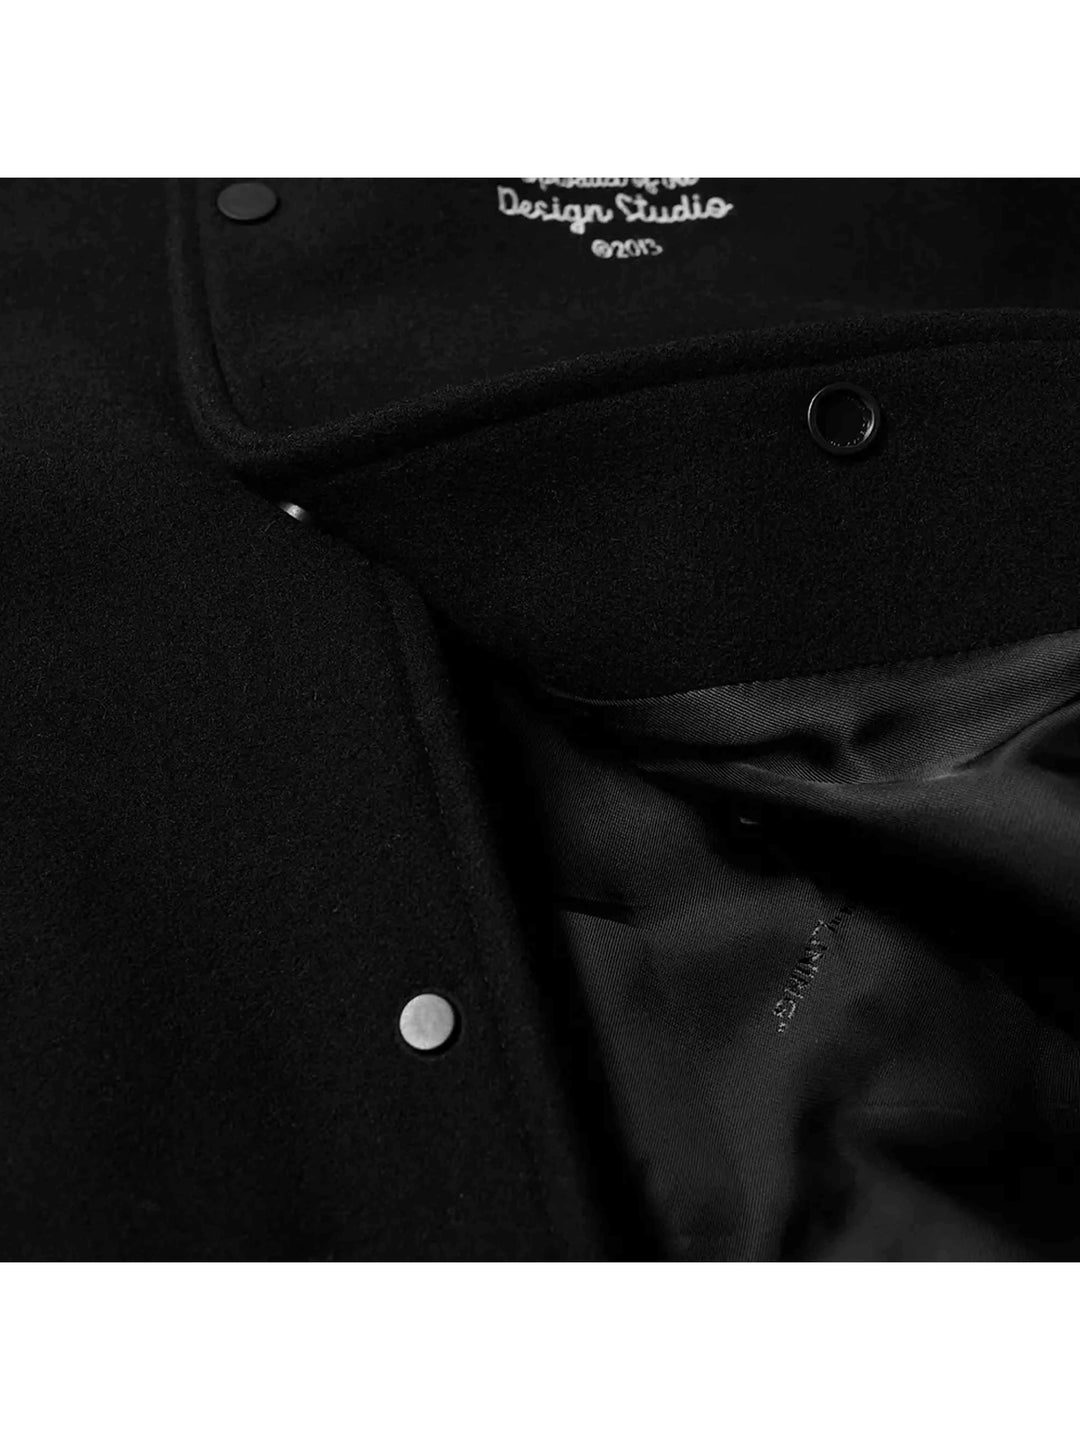 OFF-WHITE Arrow Varsity Jacket Black M Off-White